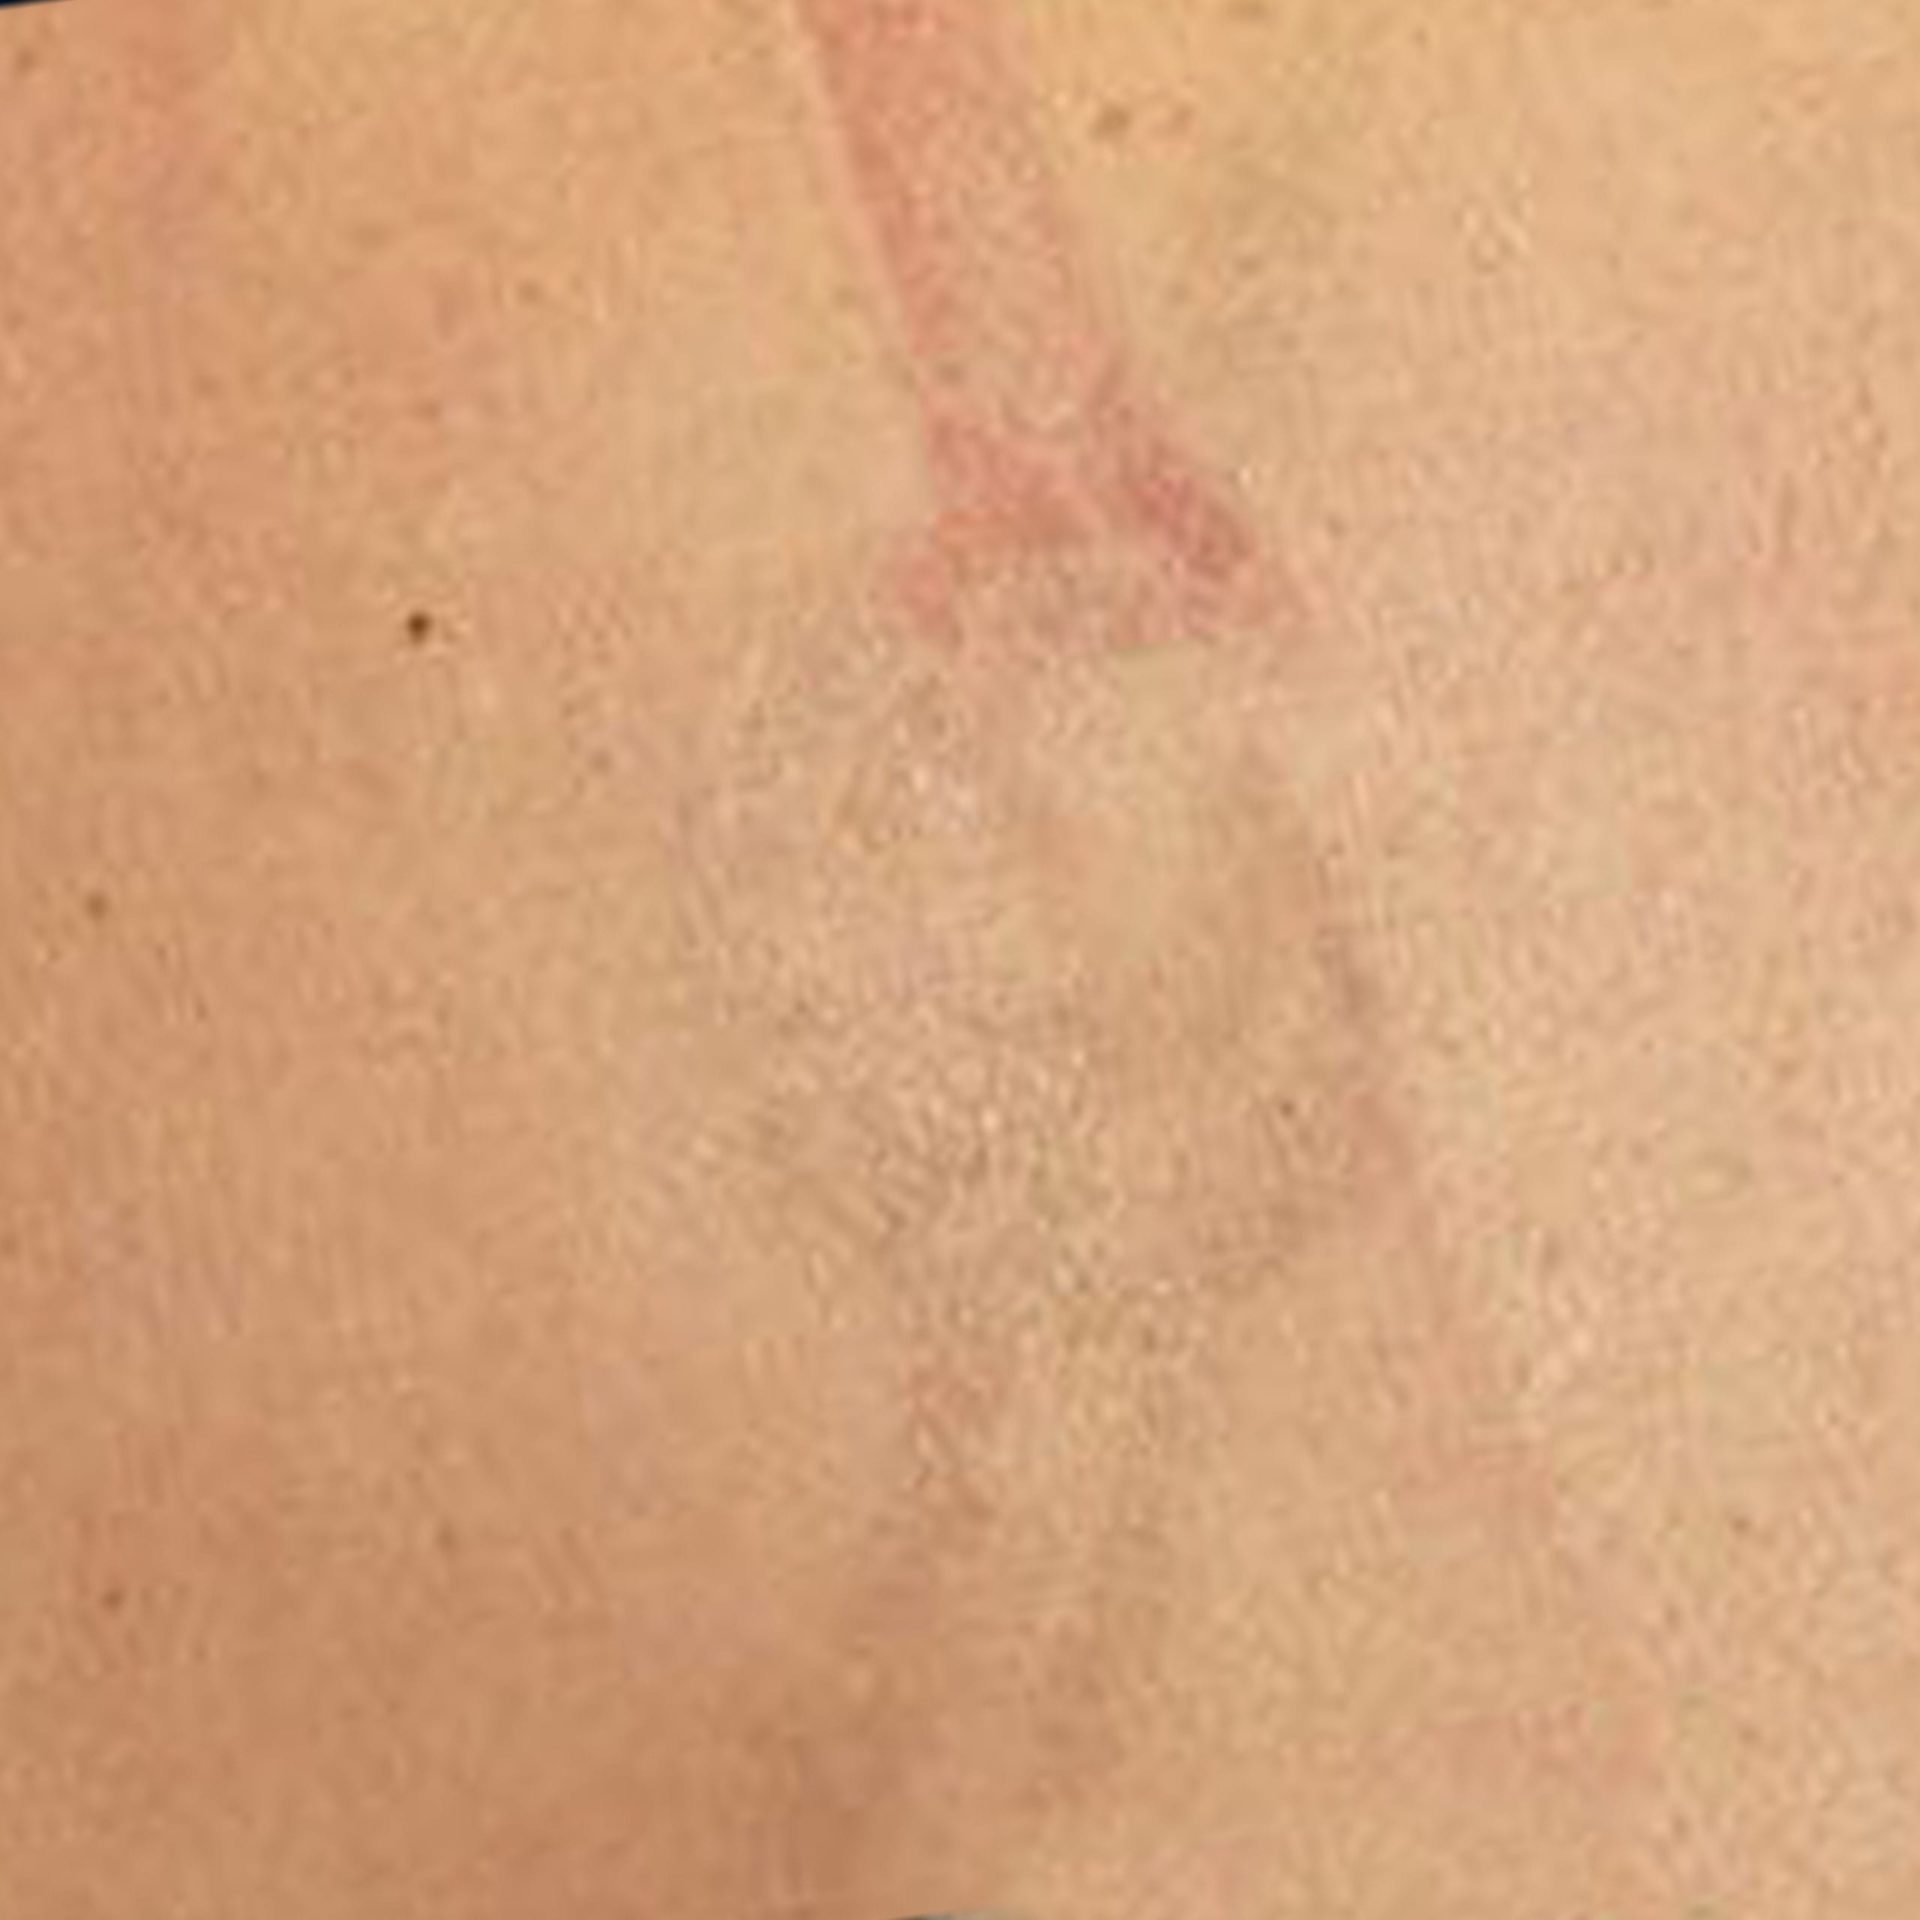 results after first candela laser tattoo